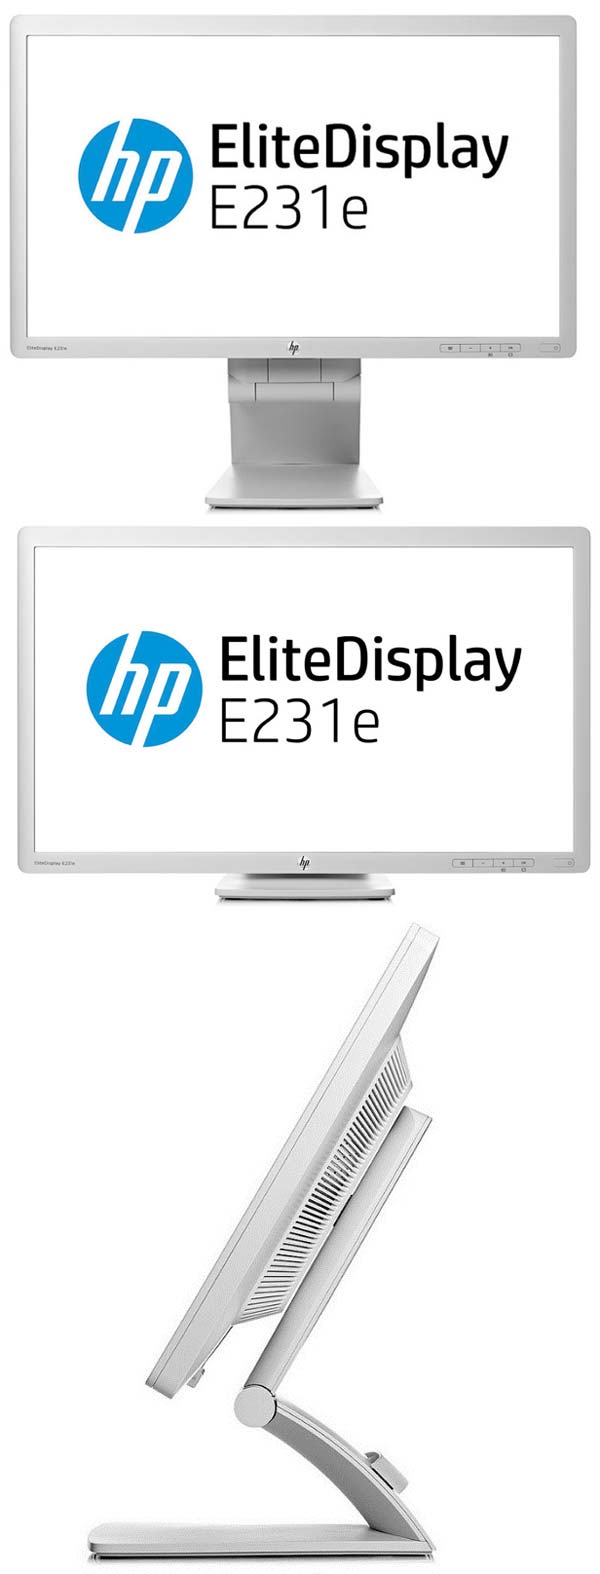 На фото показан монитор HP EliteDisplay E231e и E241e